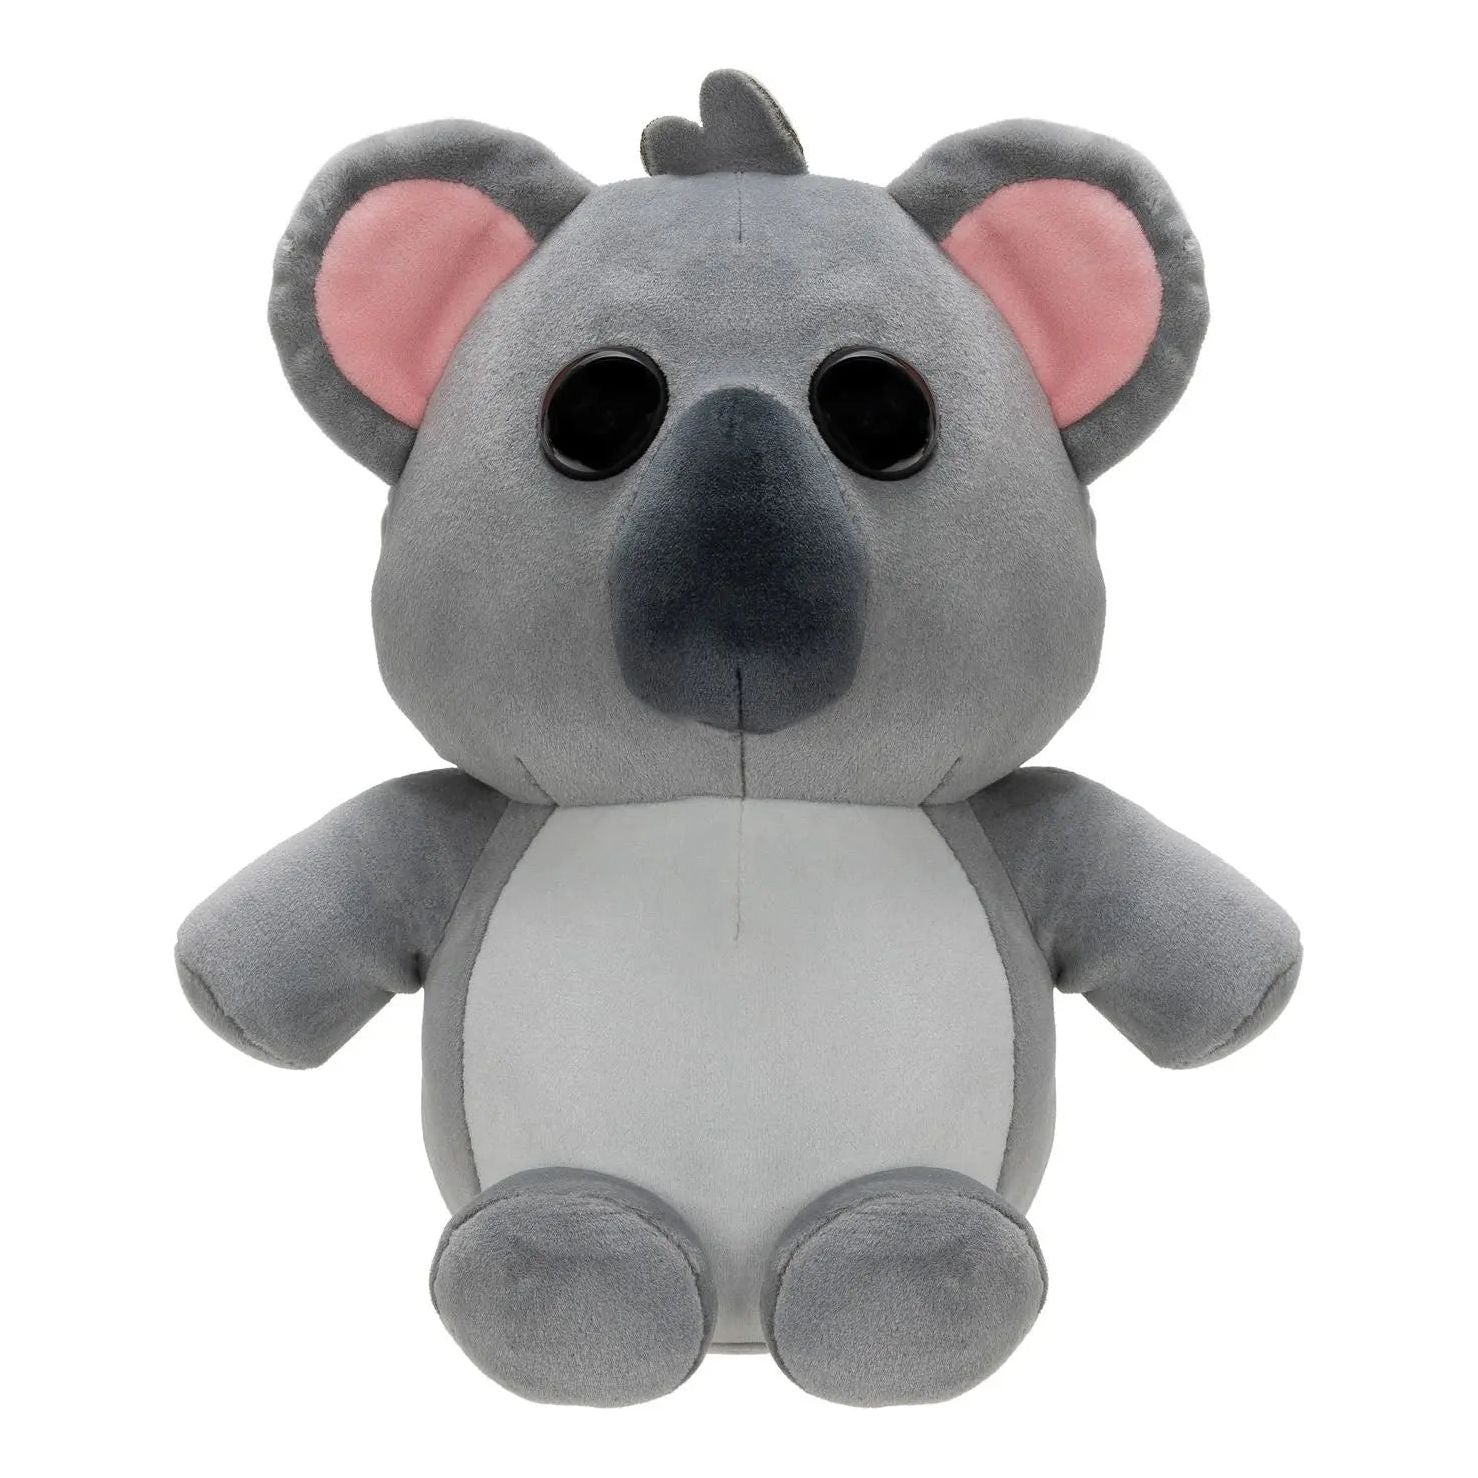 Adopt Me Collector Plush Koala Adopt Me